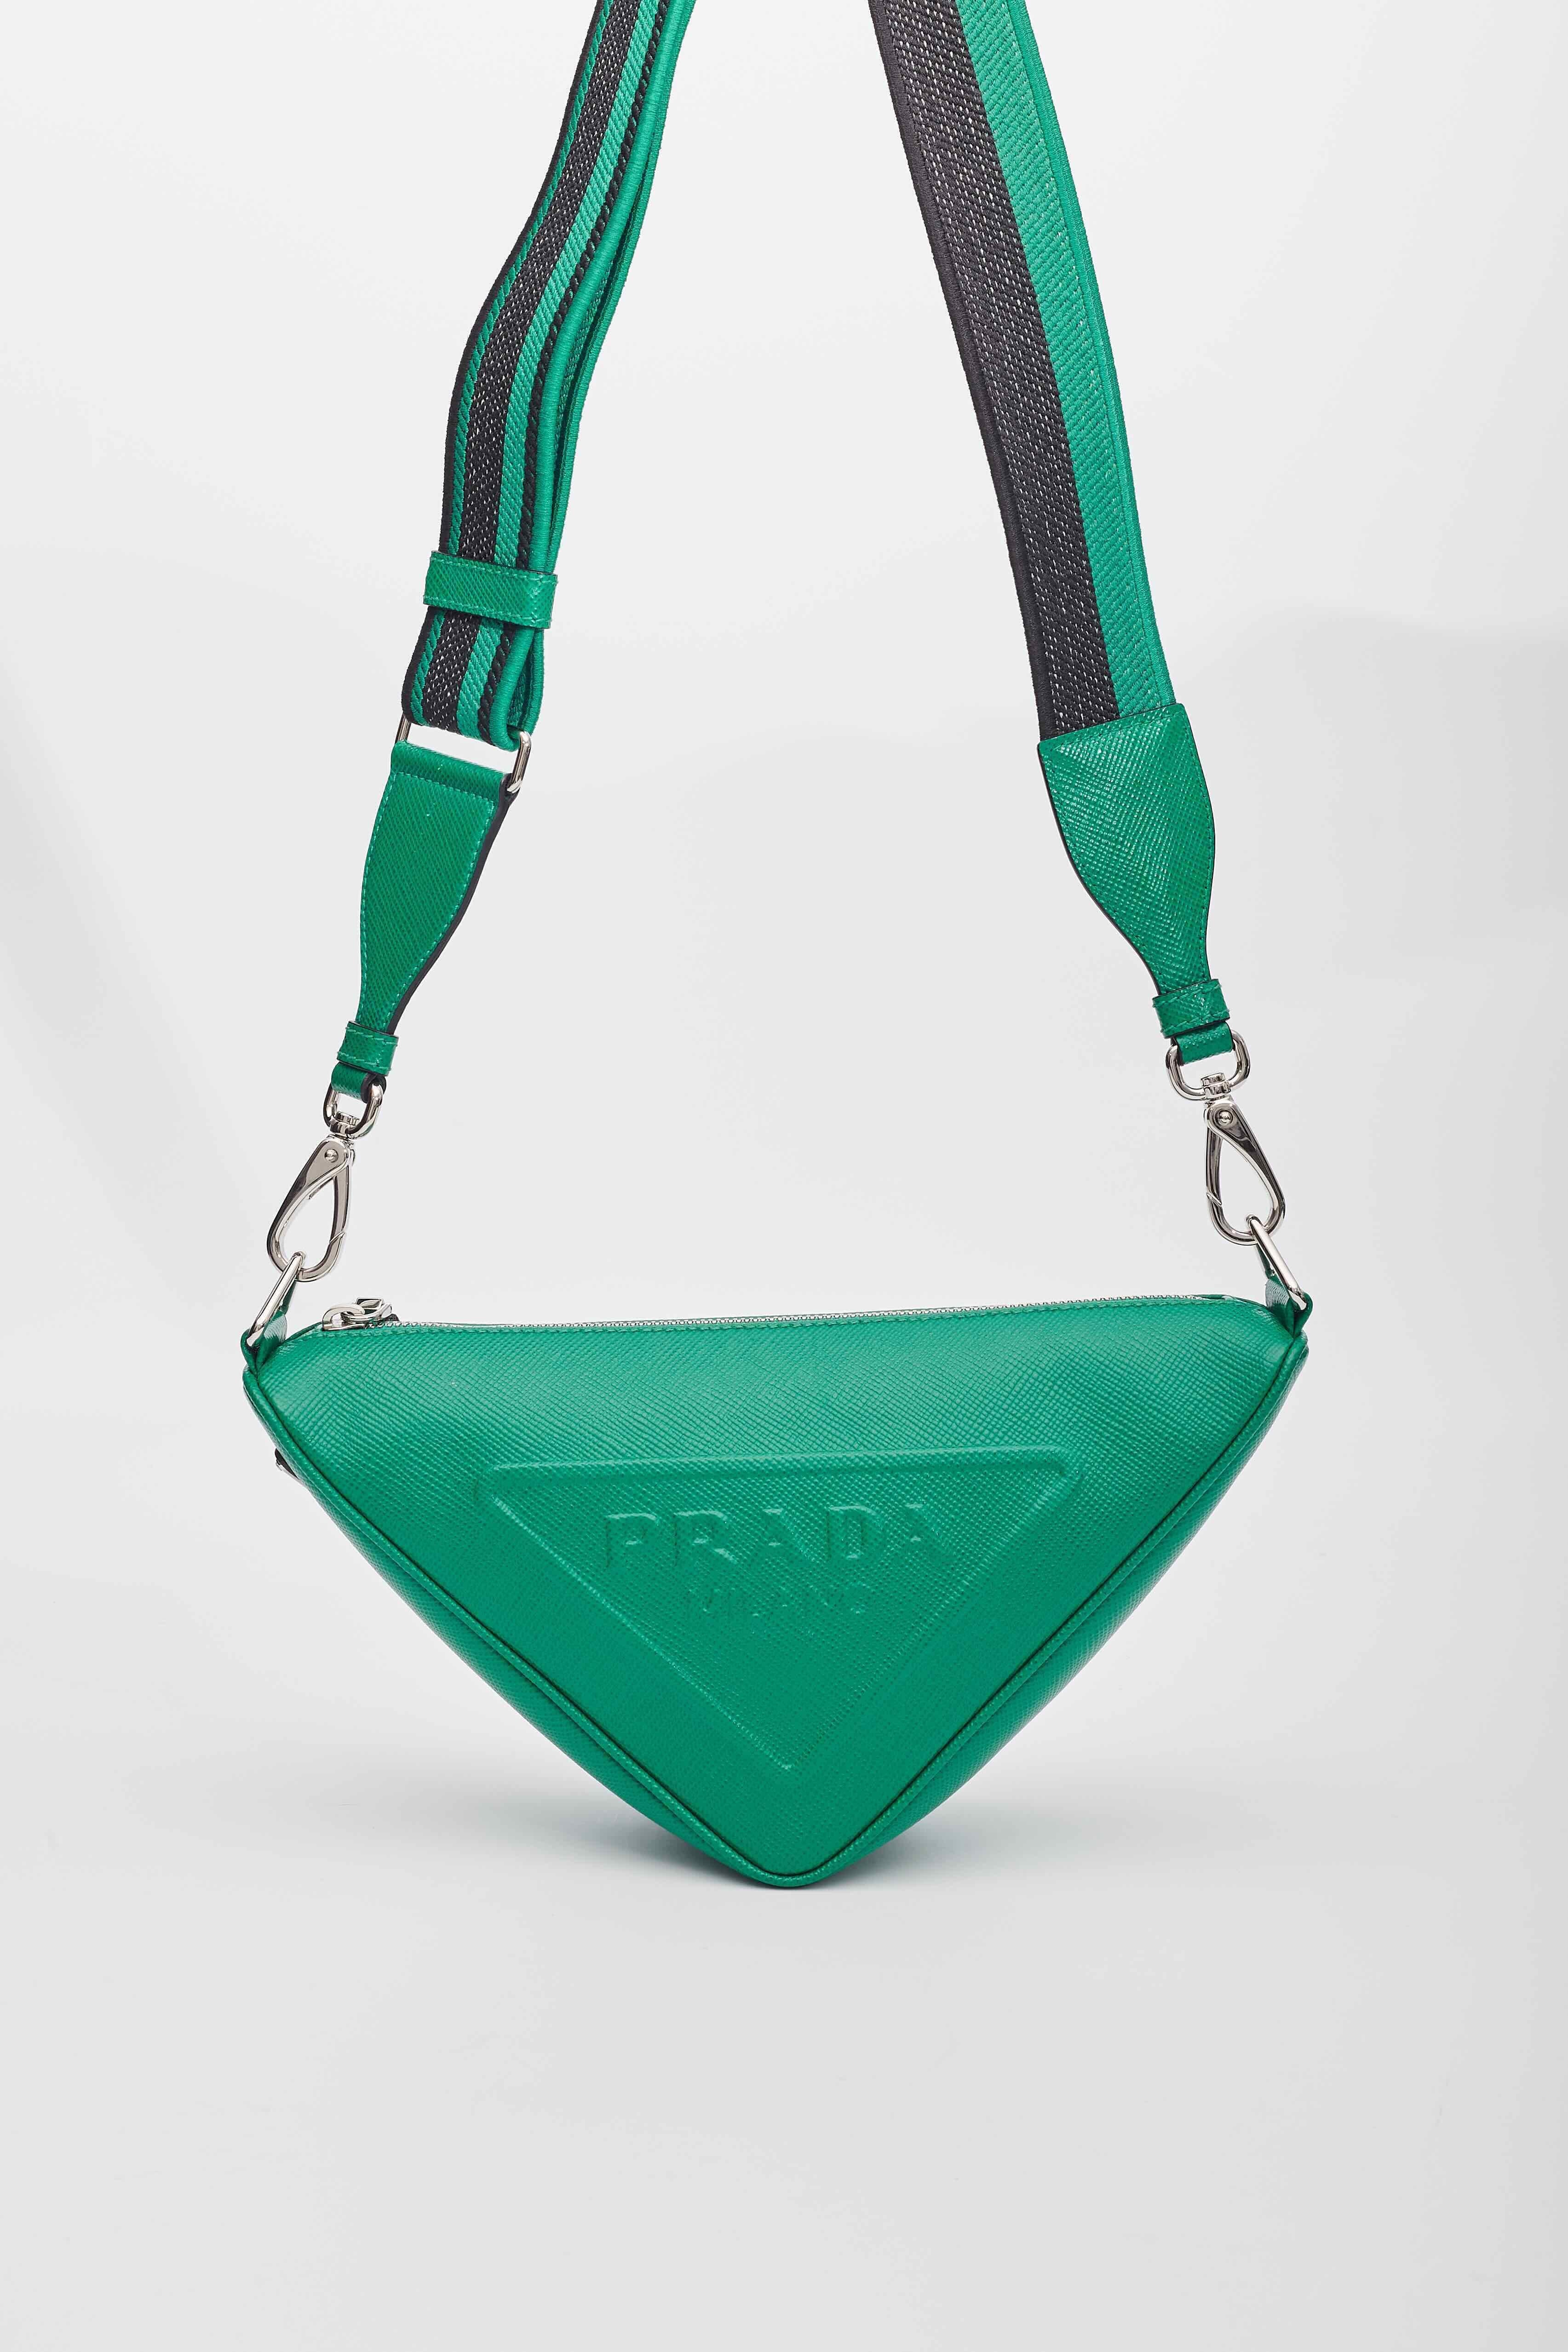 Prada Saffiano Leather Mango Green Triangle Logo Pouch Bag For Sale 6